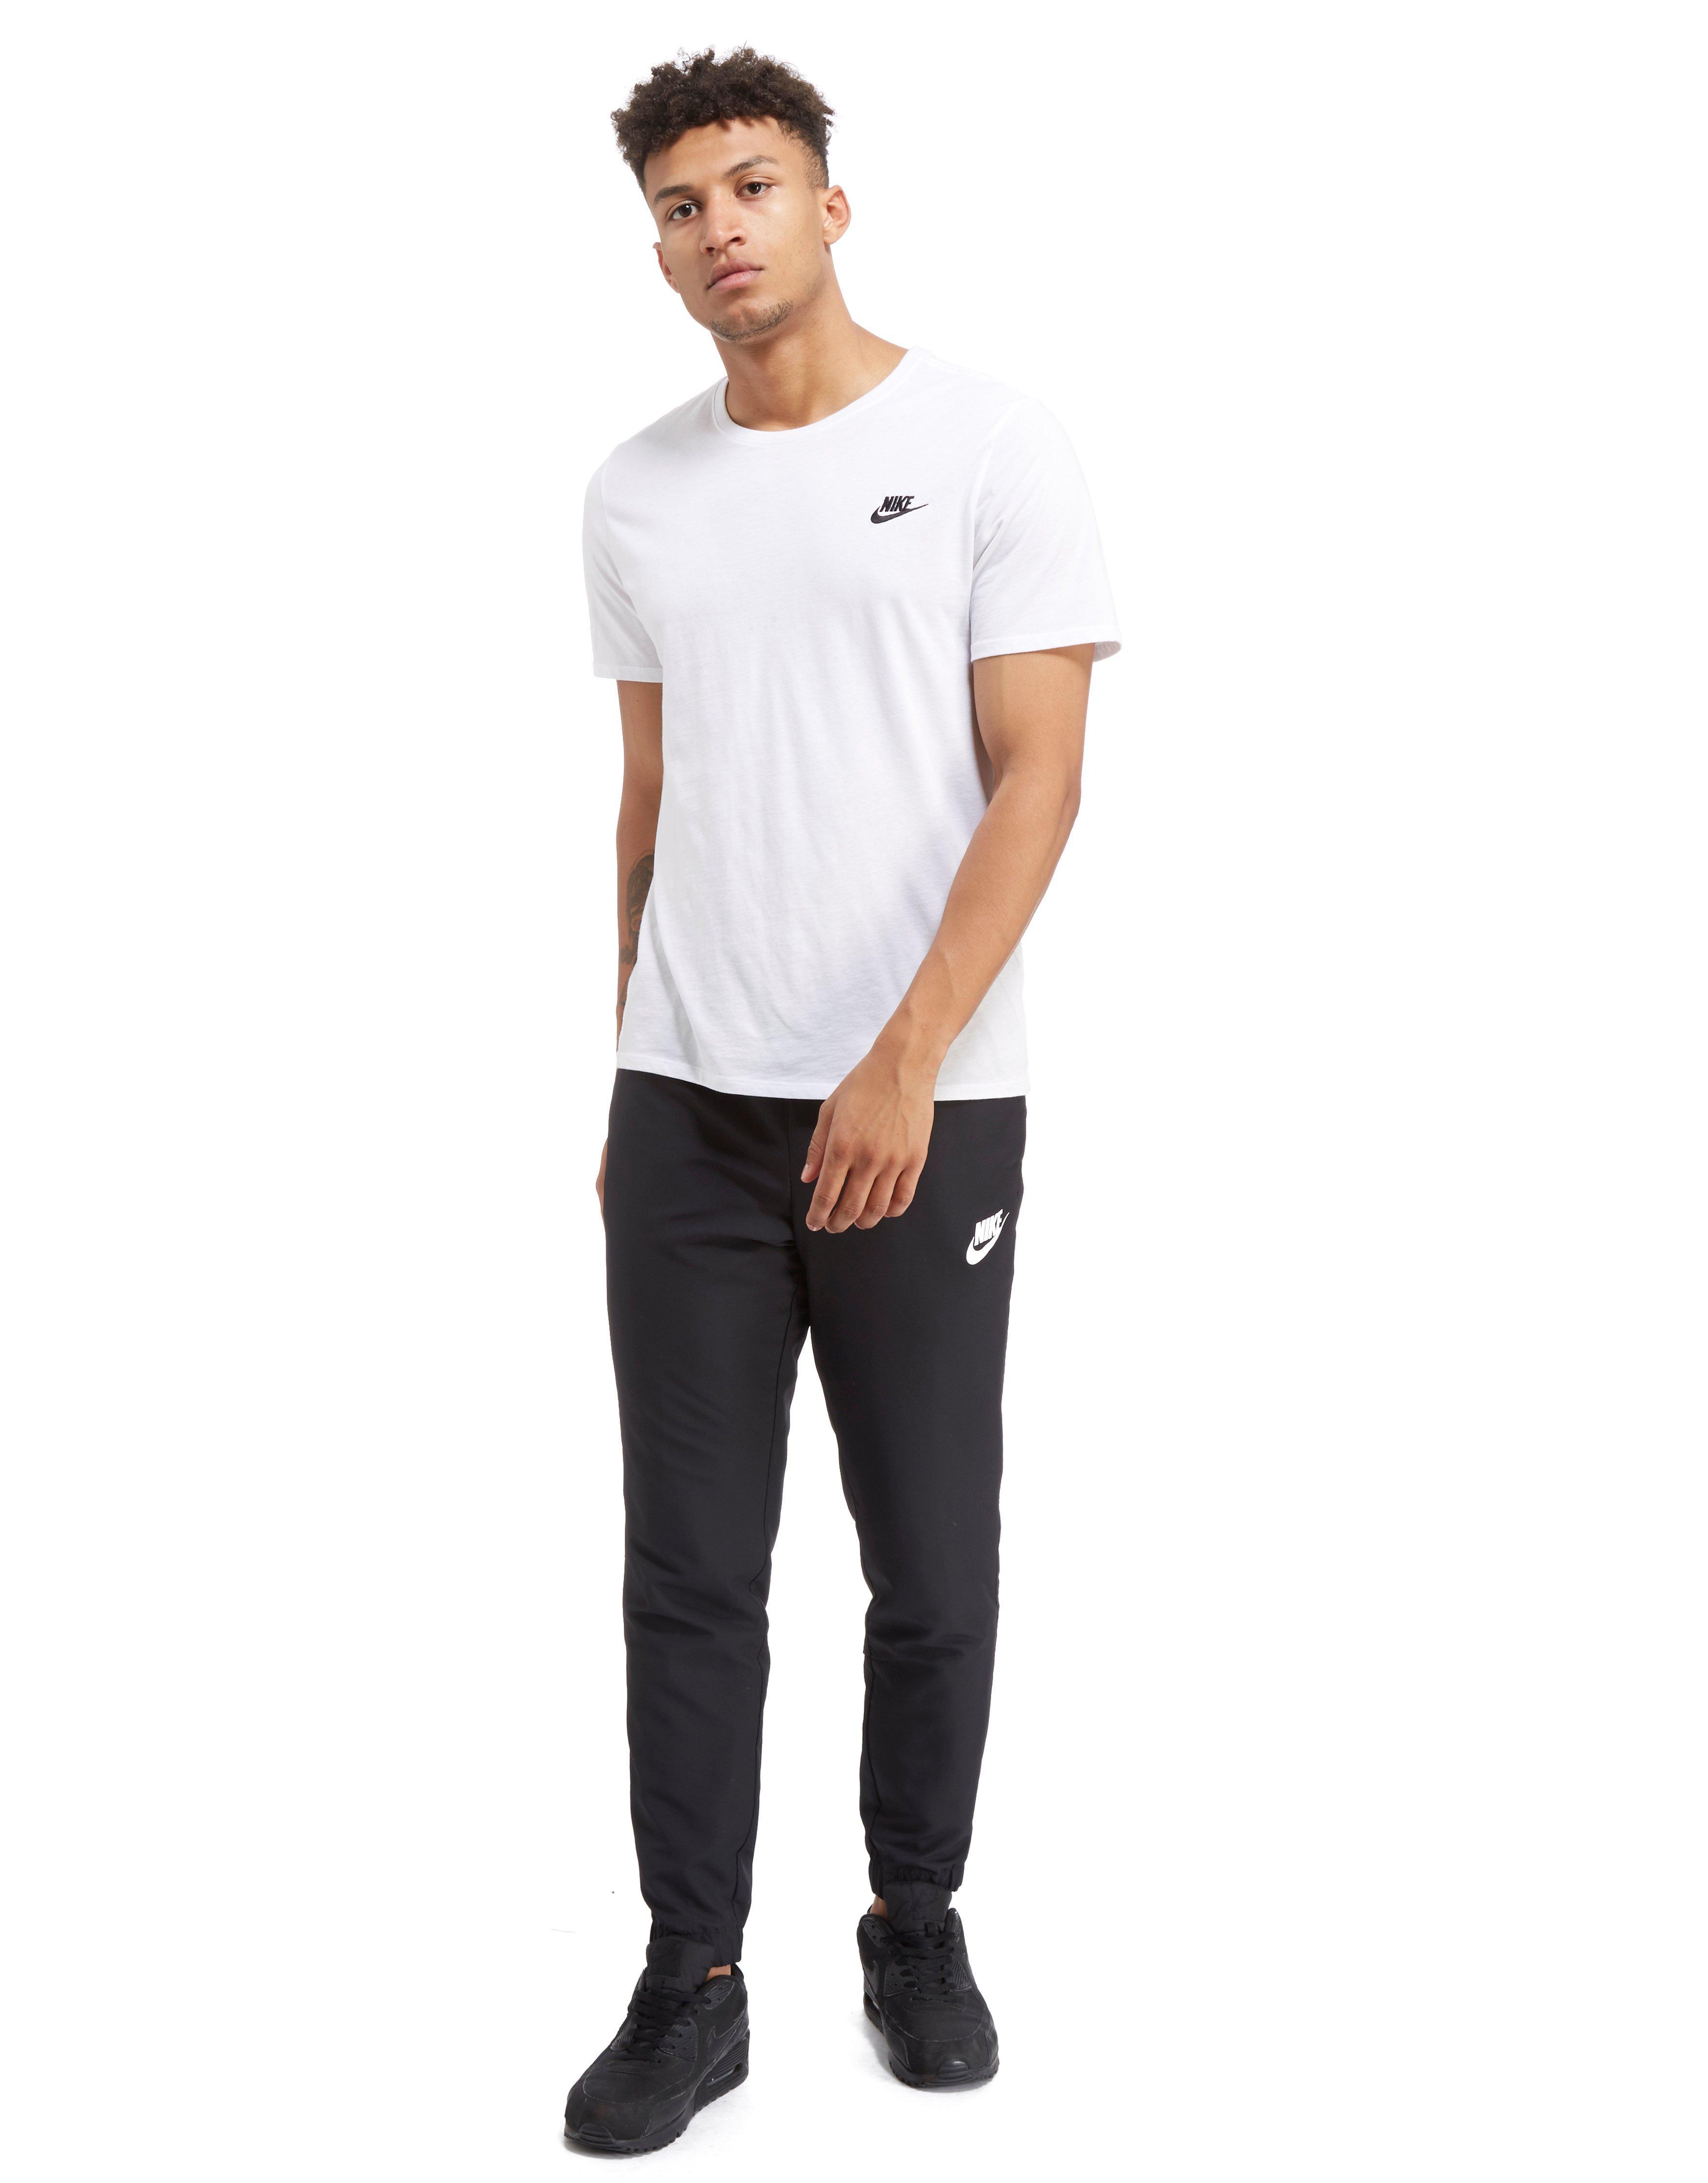 Nike Cotton Shut Out 2 Woven Pants in Black/White (Black) for Men - Lyst